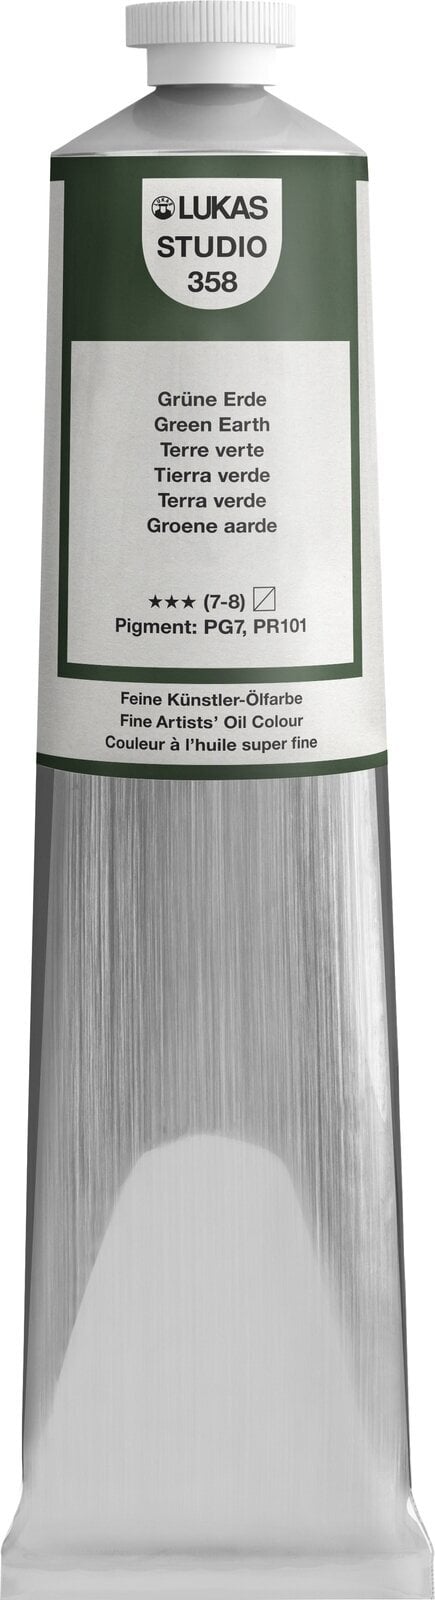 Ölfarbe Lukas Studio Oil Paint Aluminium Tube Ölgemälde Green Earth 200 ml 1 Stck